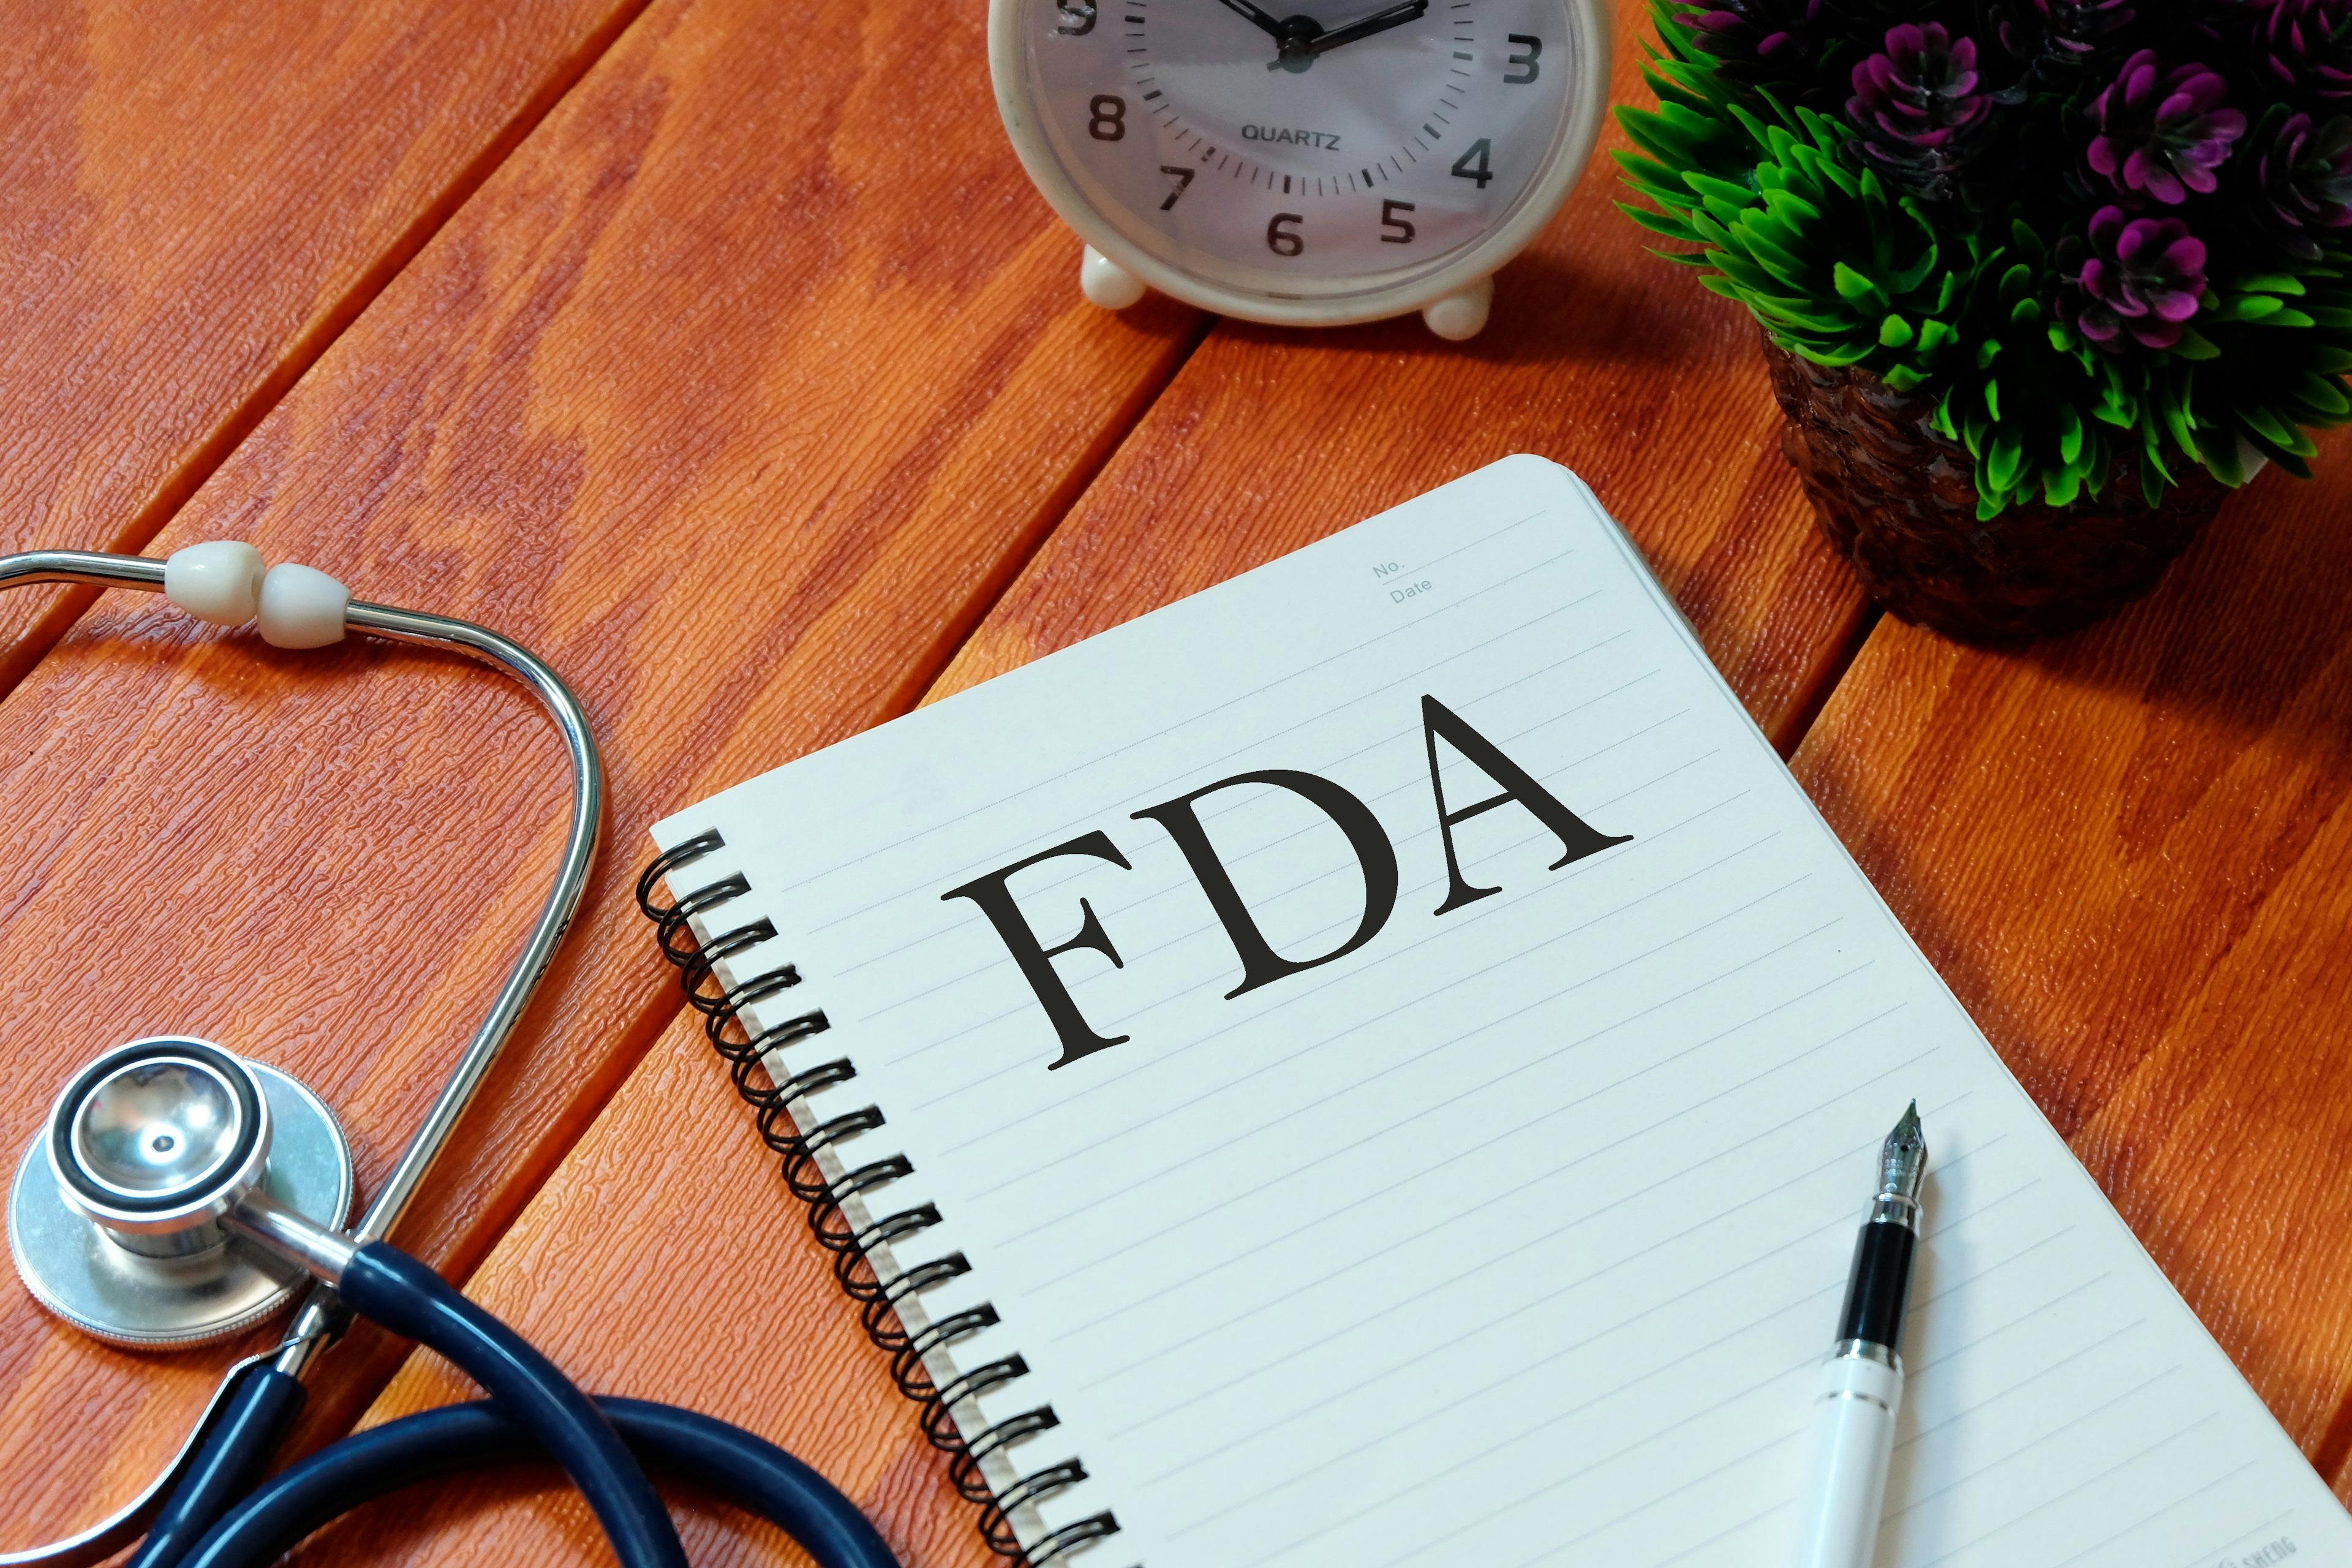 Senate confirms FDA Chief